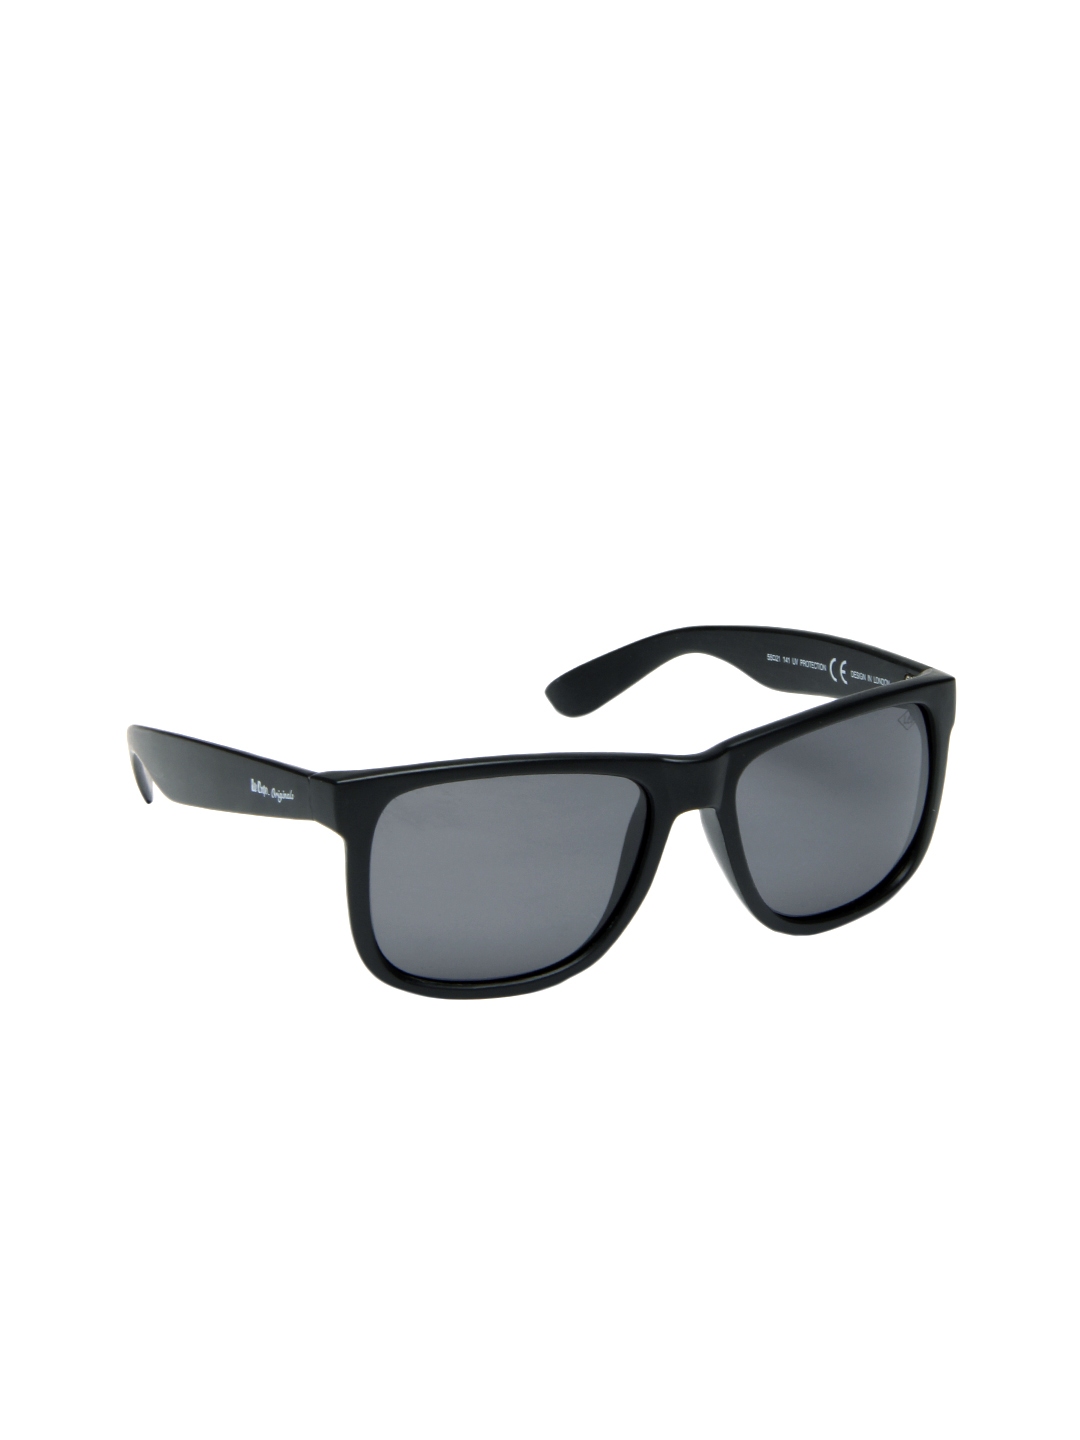 Buy Lee Cooper Men Wayfarer Sunglasses - Sunglasses for ...